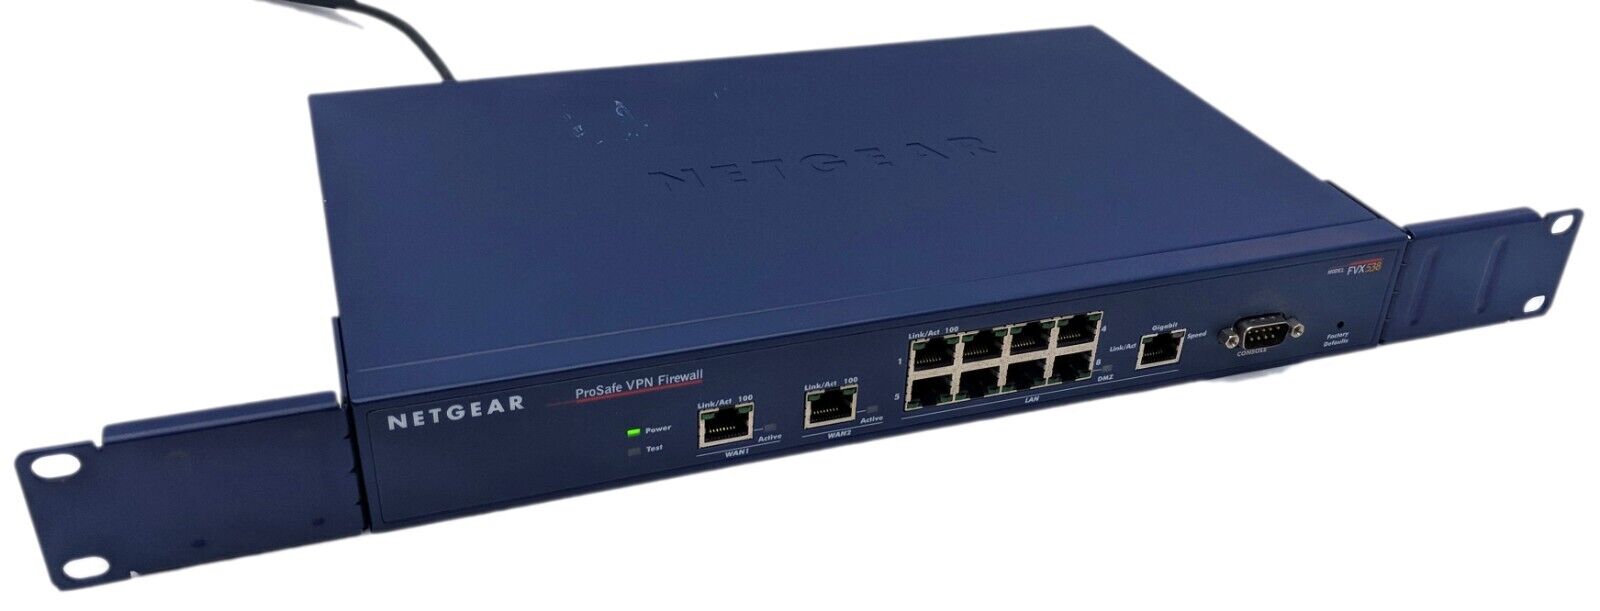 NETGEAR ProSafe FVX538 v2 VPN Firewall Dual Wan Switch 8 Ports 10/100 - Tested